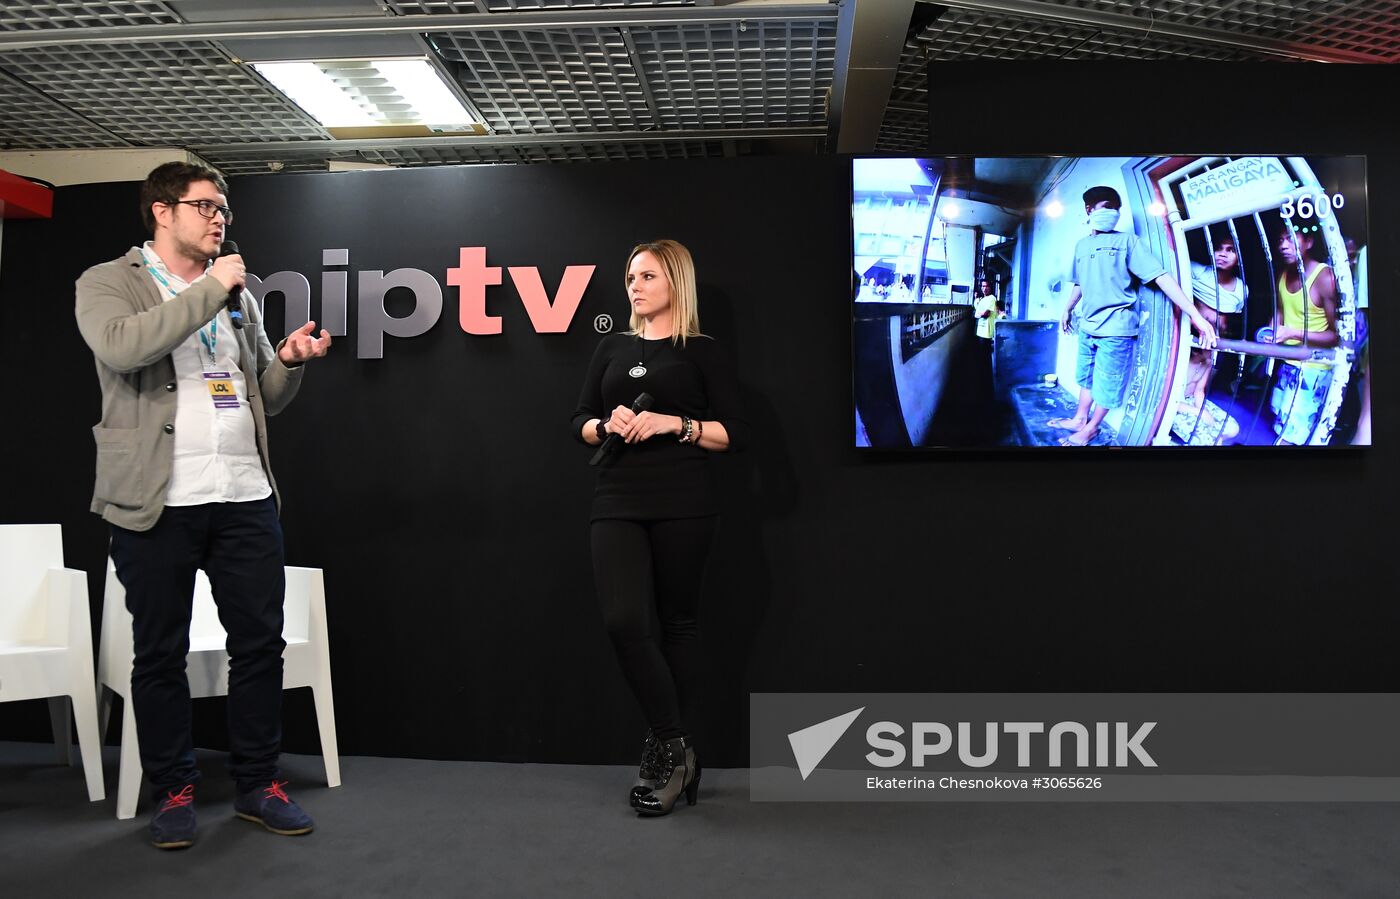 MIPTV international television and digital content market